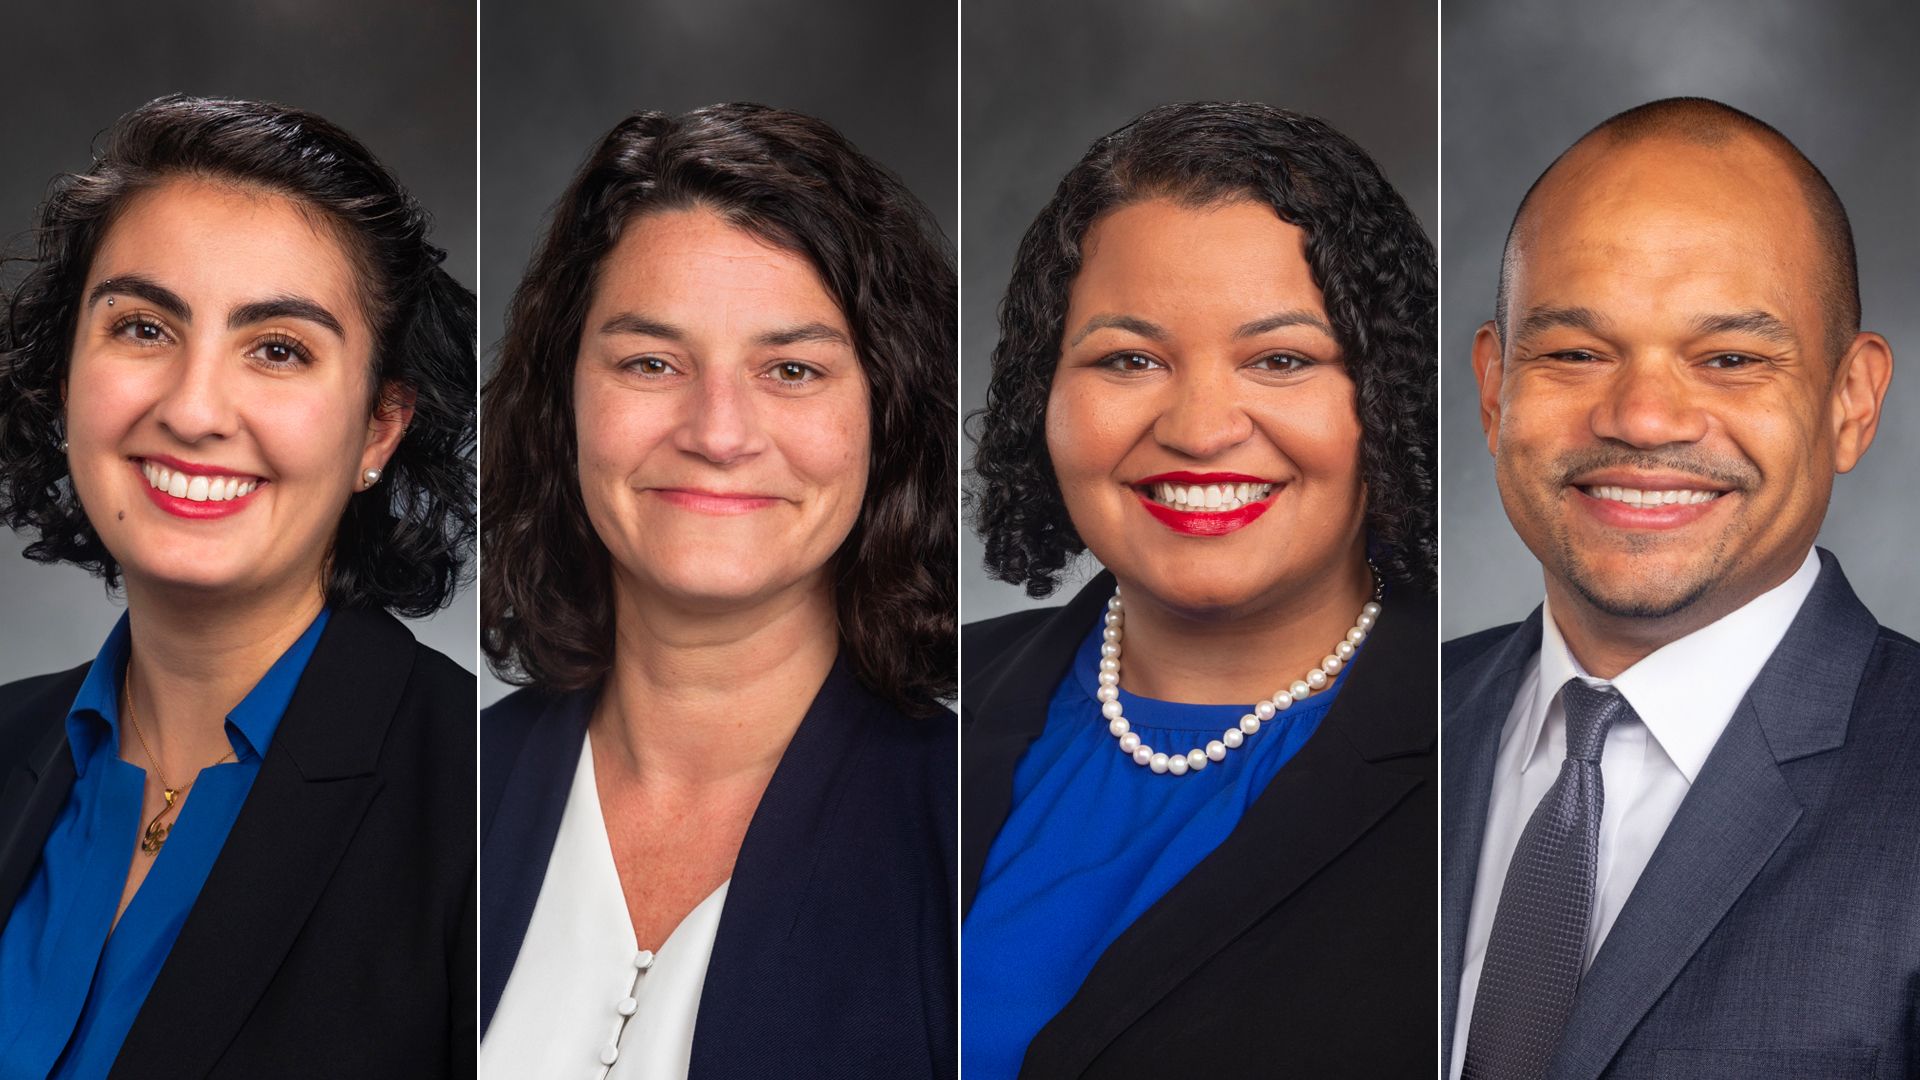 The faces of four newly elected Washington state legislators 